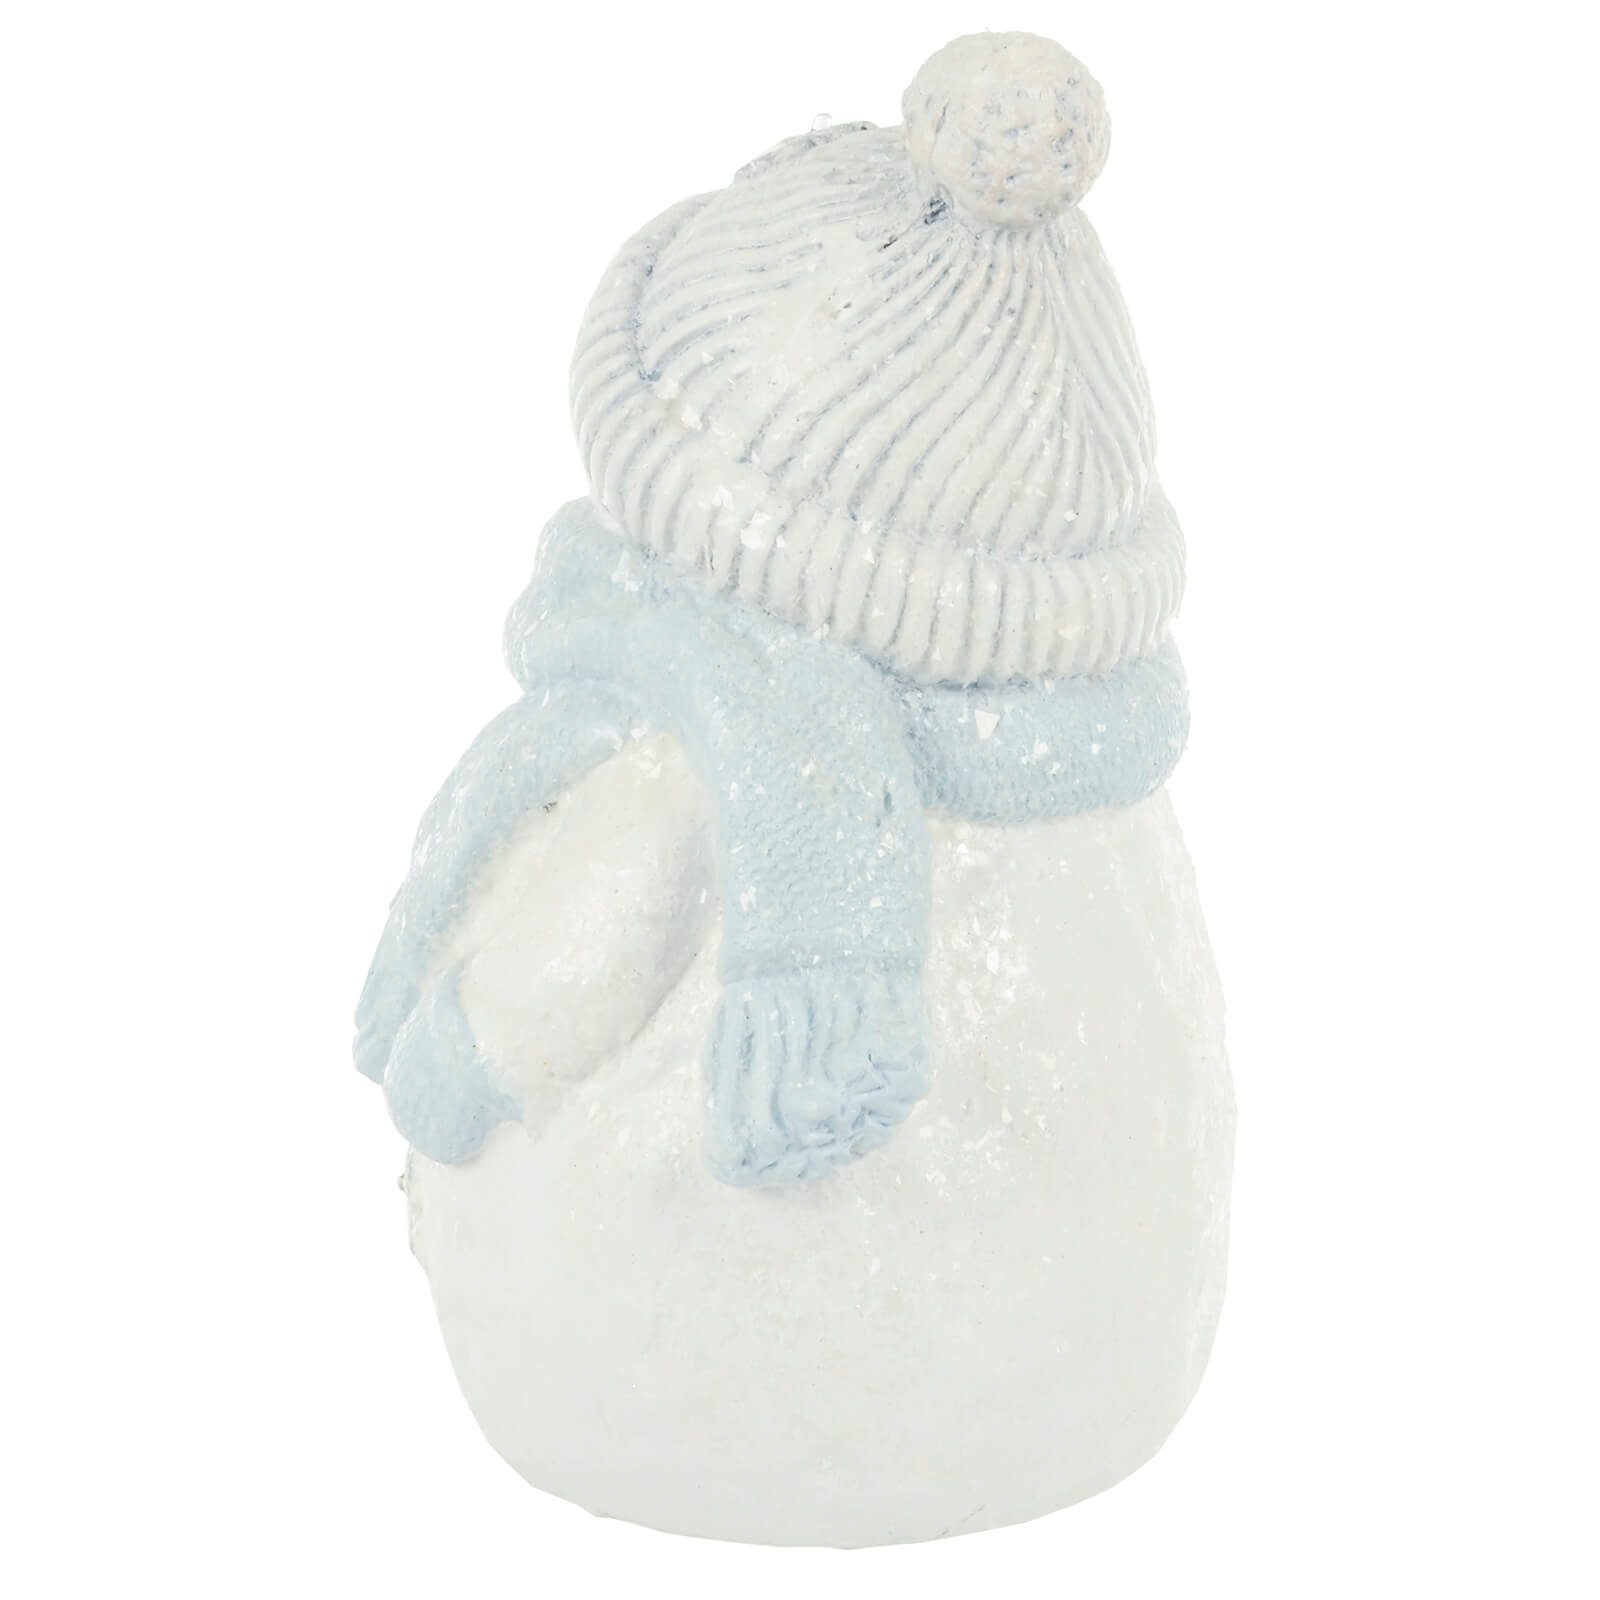 Mr Crimbo Light Up Christmas Snowman Santa White Blue Ceramic 37cm - MrCrimbo.co.uk -XS7149 - Snowman -